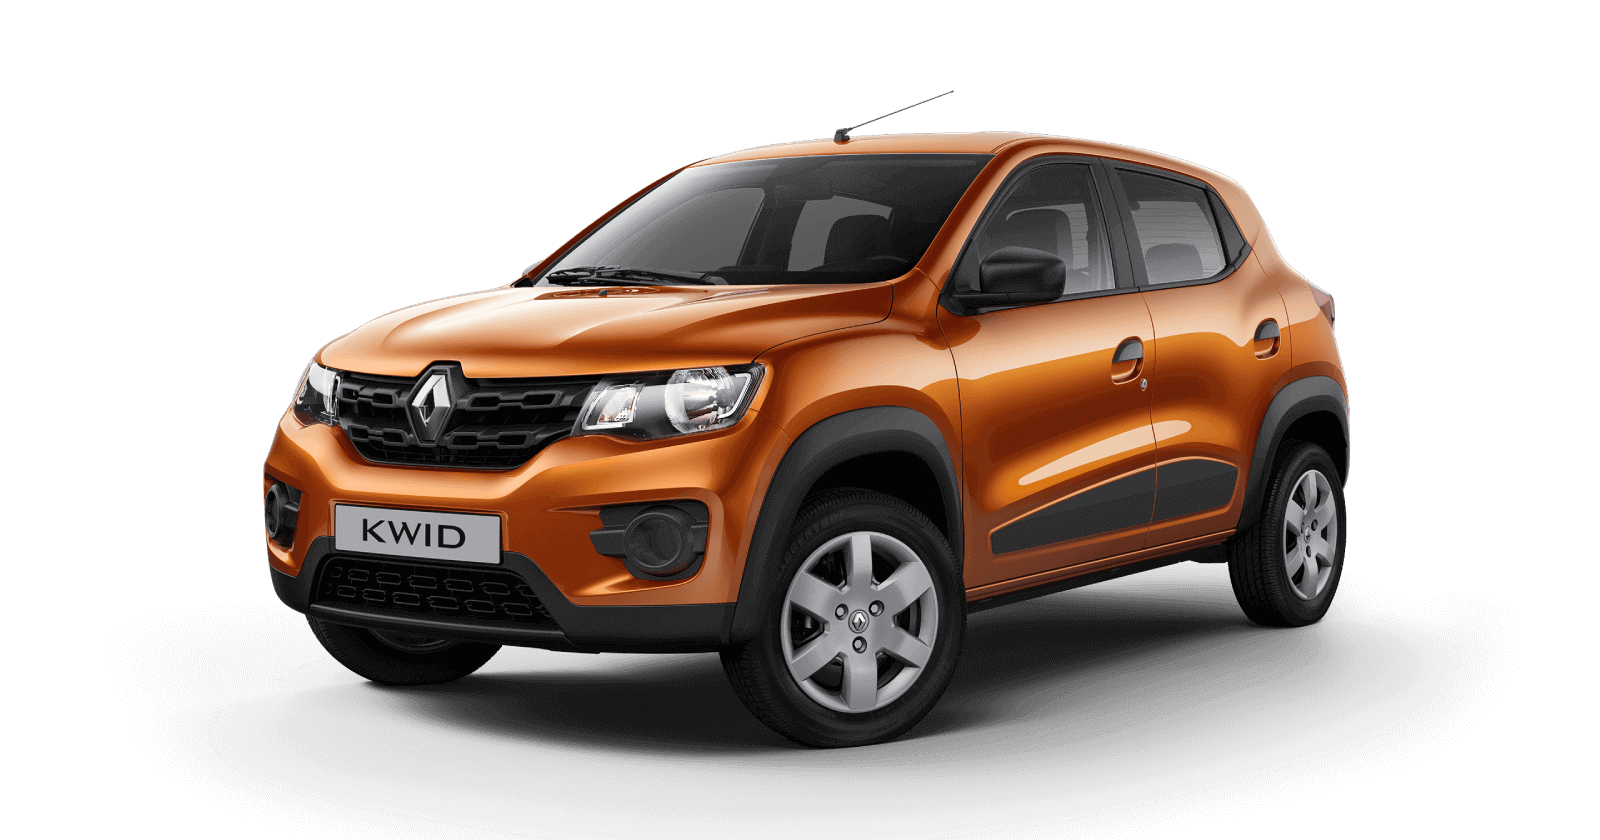 Renault Kwid Best Car Under 5 lakh in India